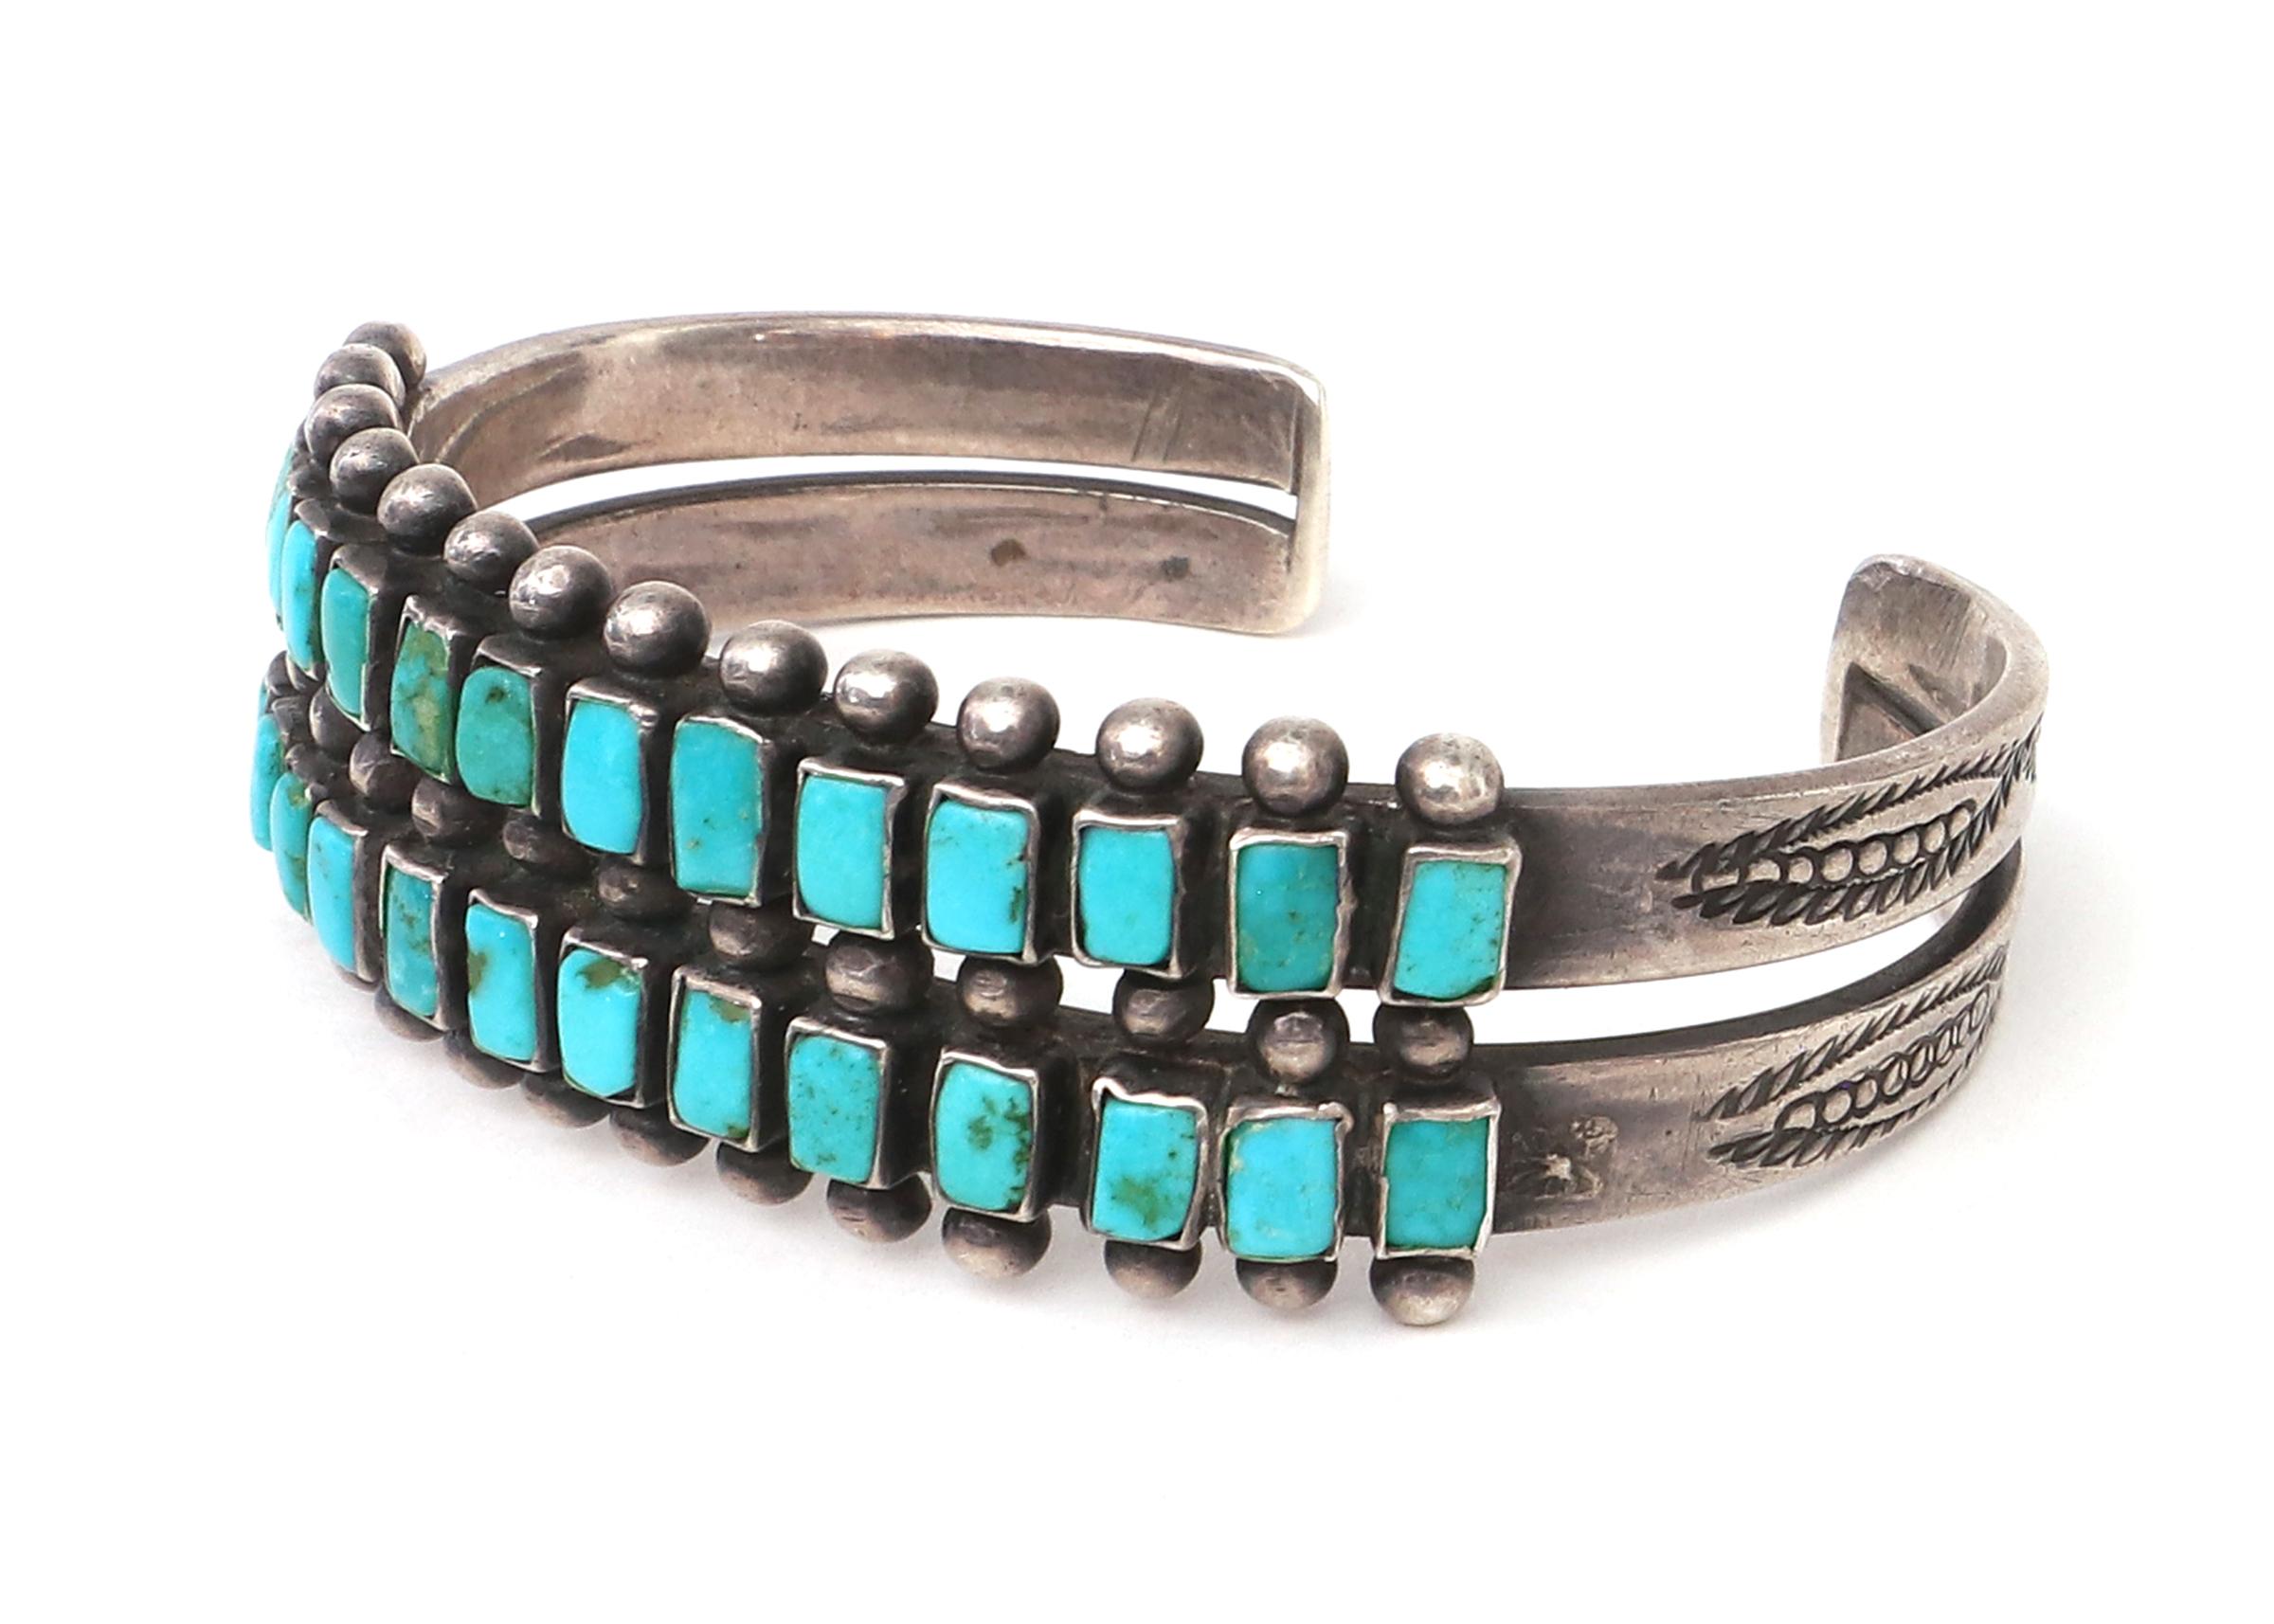 Silver 1925 Zuni Sleeping Beauty Turquoise Bracelet, Trading Post Era Southwest Jewerly